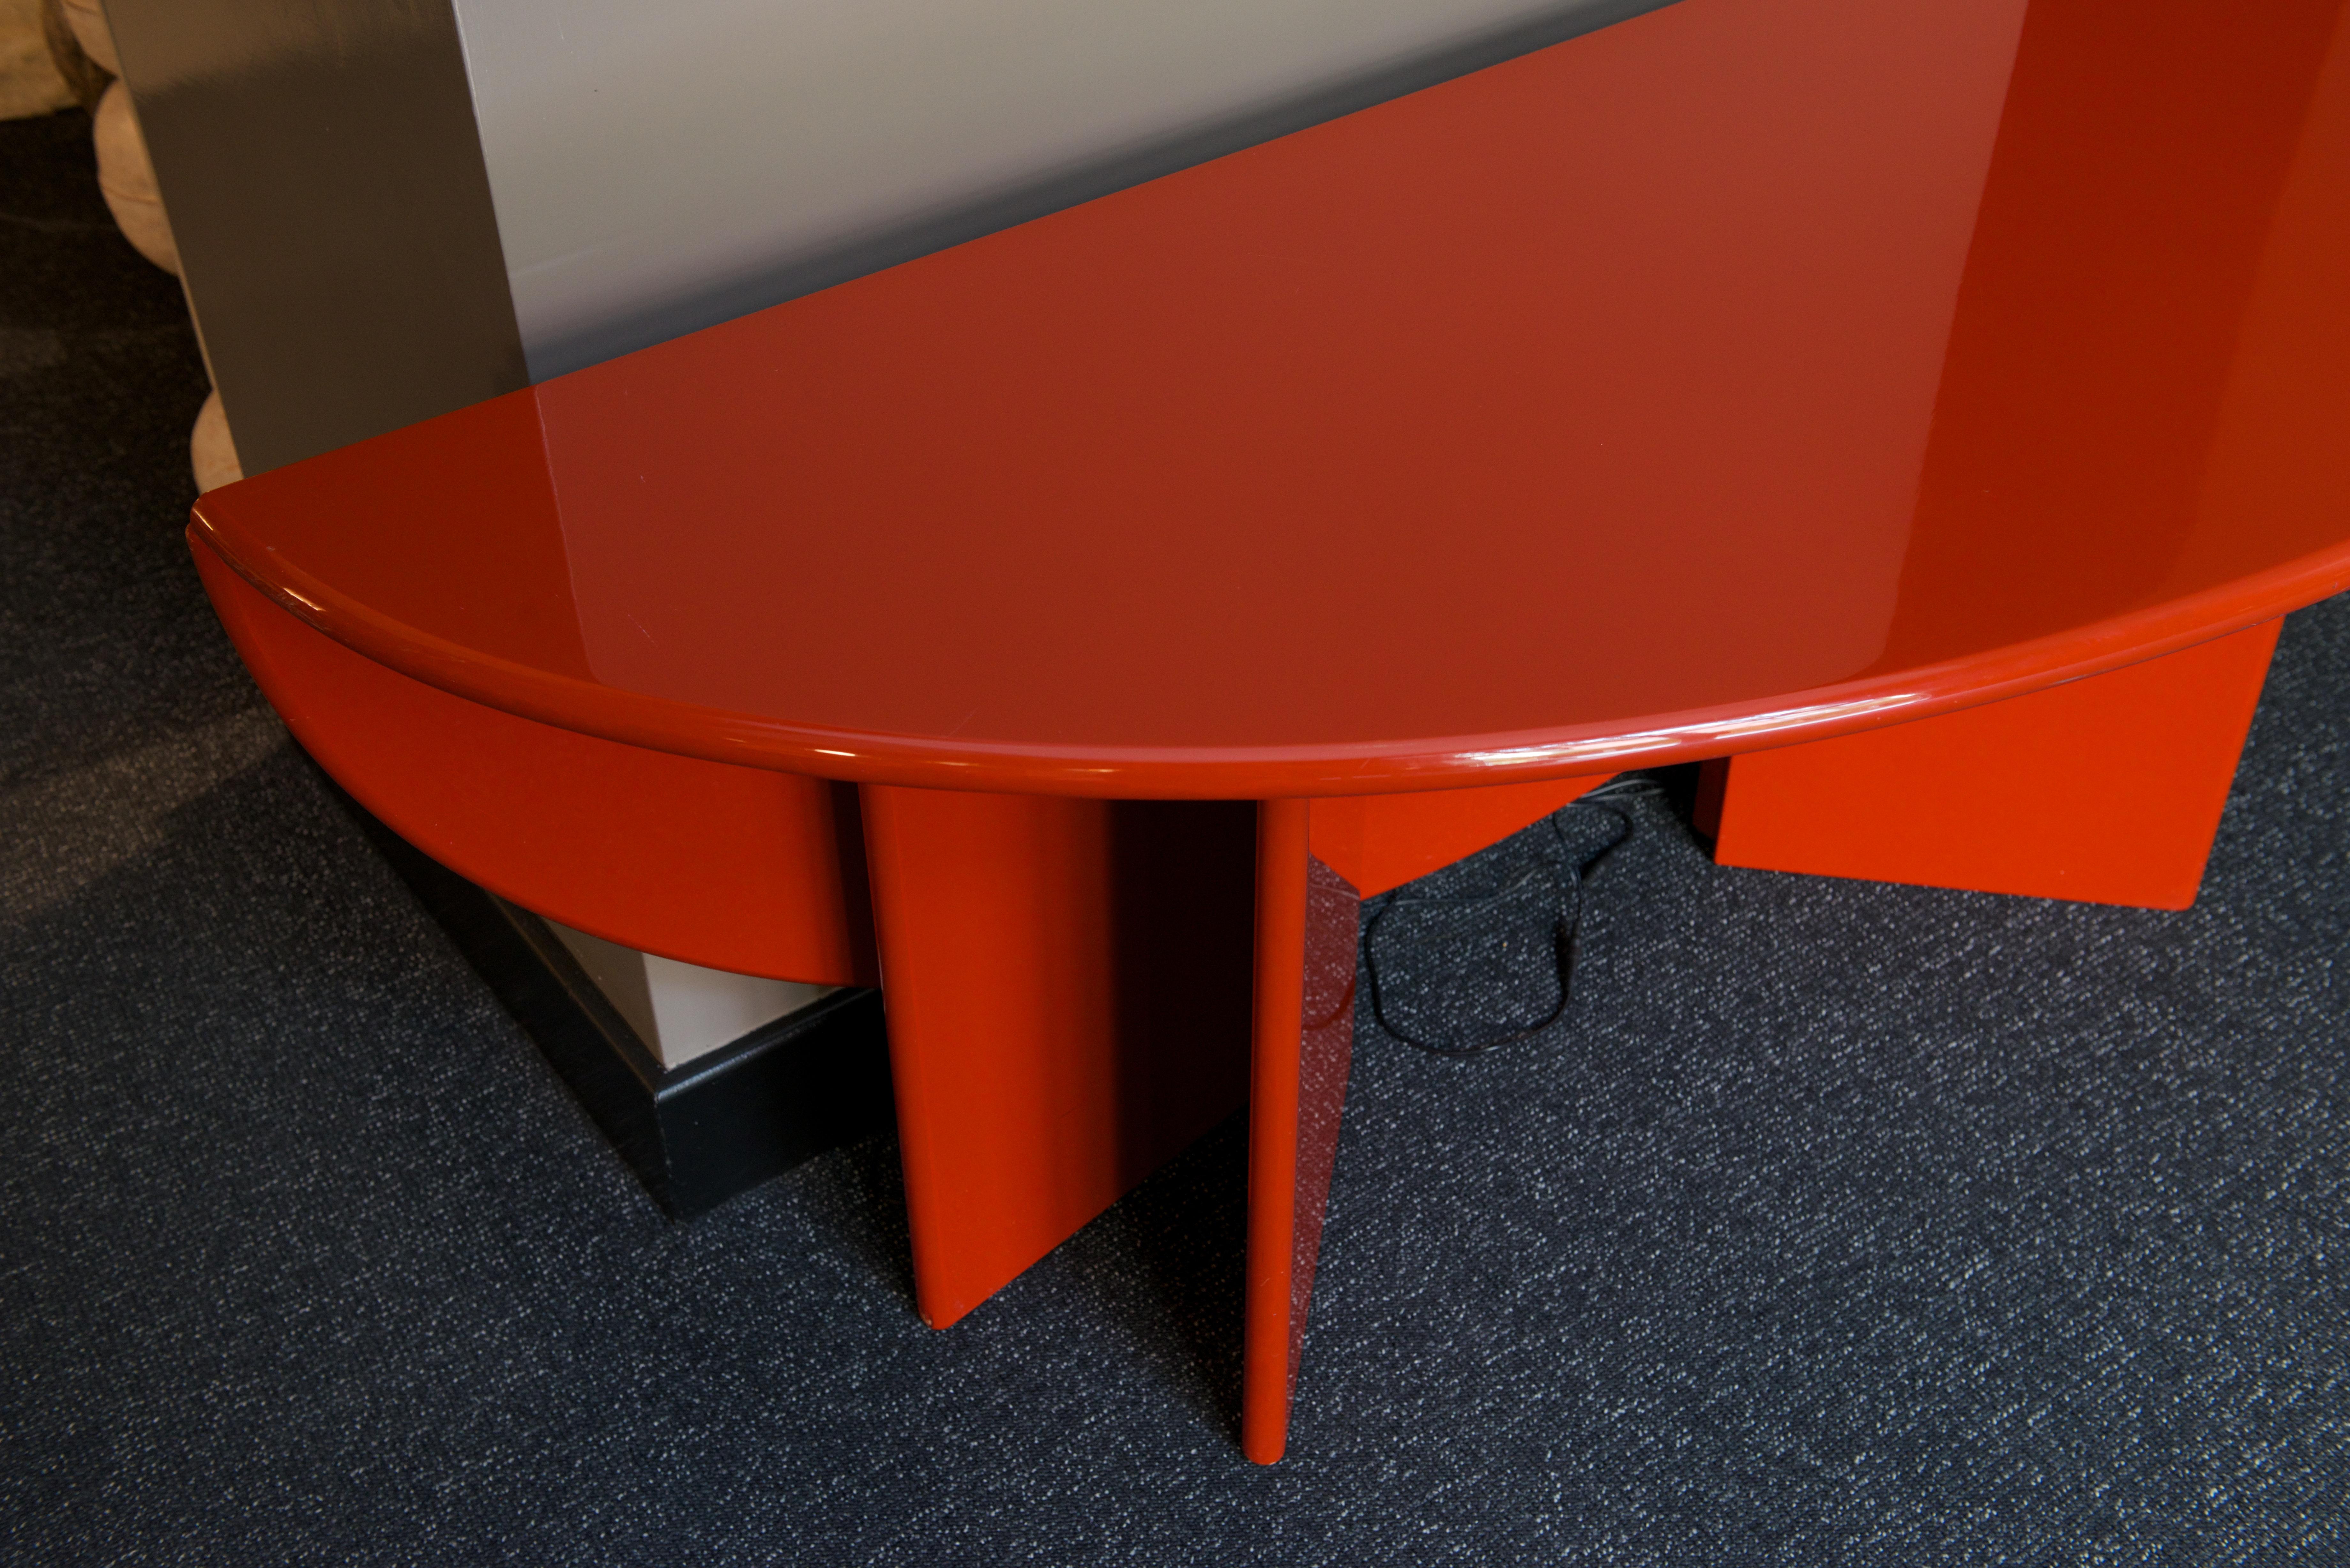 The table was designed, together with other pieces of furniture by Kazuhide Takahama in 1975 for Simon Ultramobile (see Accademia delle Belle Arti di Brera, Dino Gavina Ultrarazionale Ultramobile, Editrice Compositori, Milano, 1998, p. 203.). It was